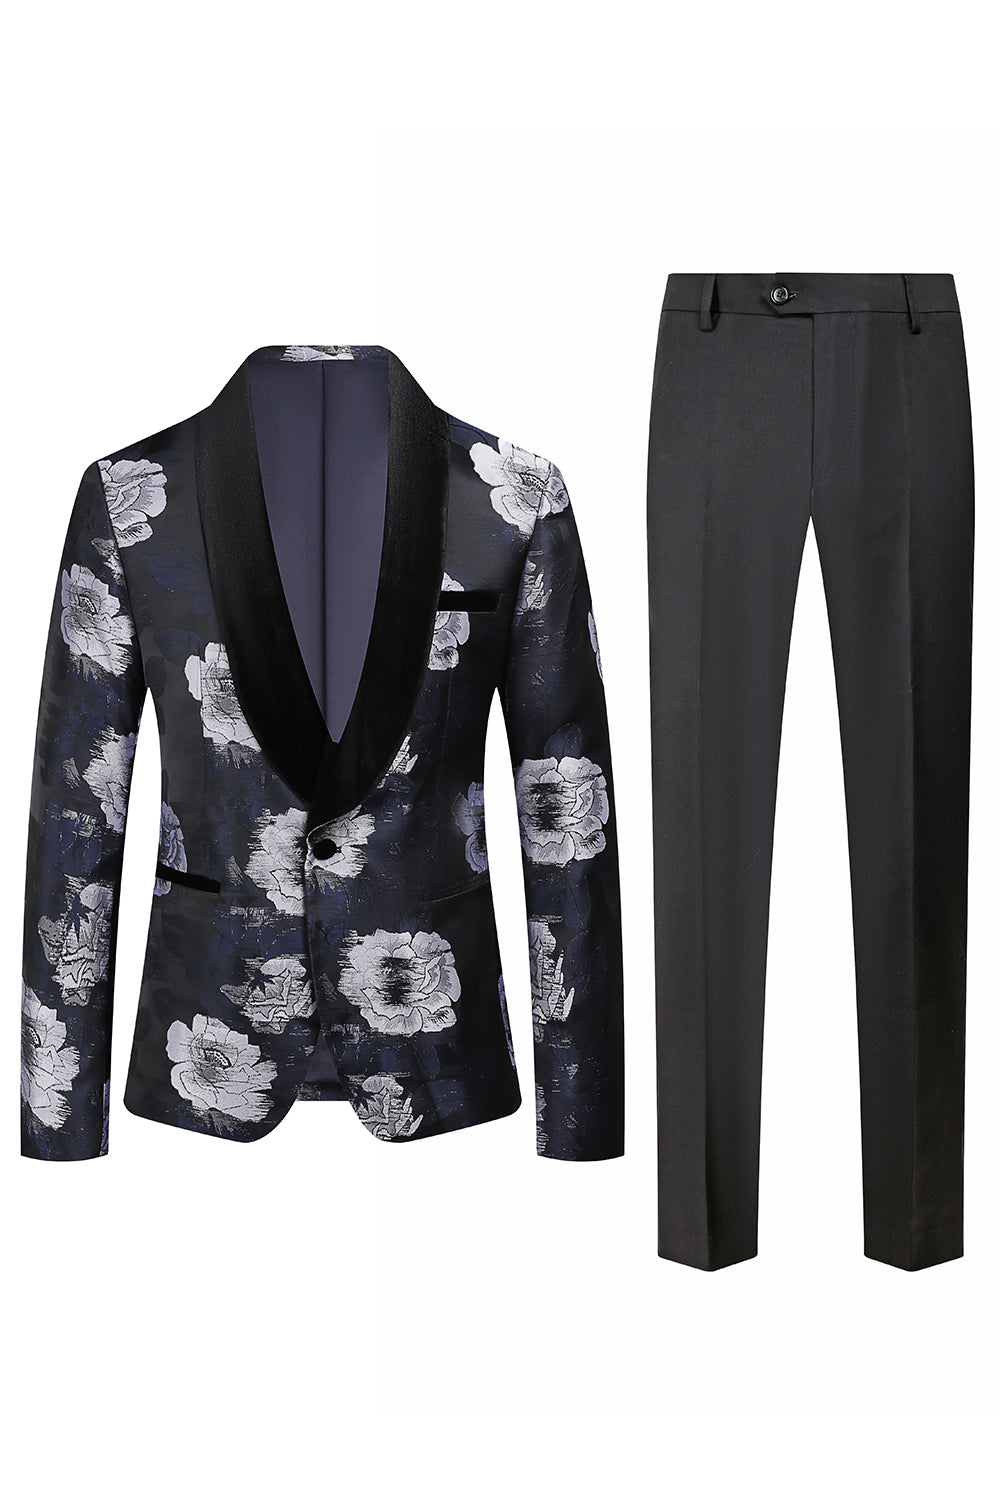 Black Floral Jacquard Shawl Lapel Men Prom Suits